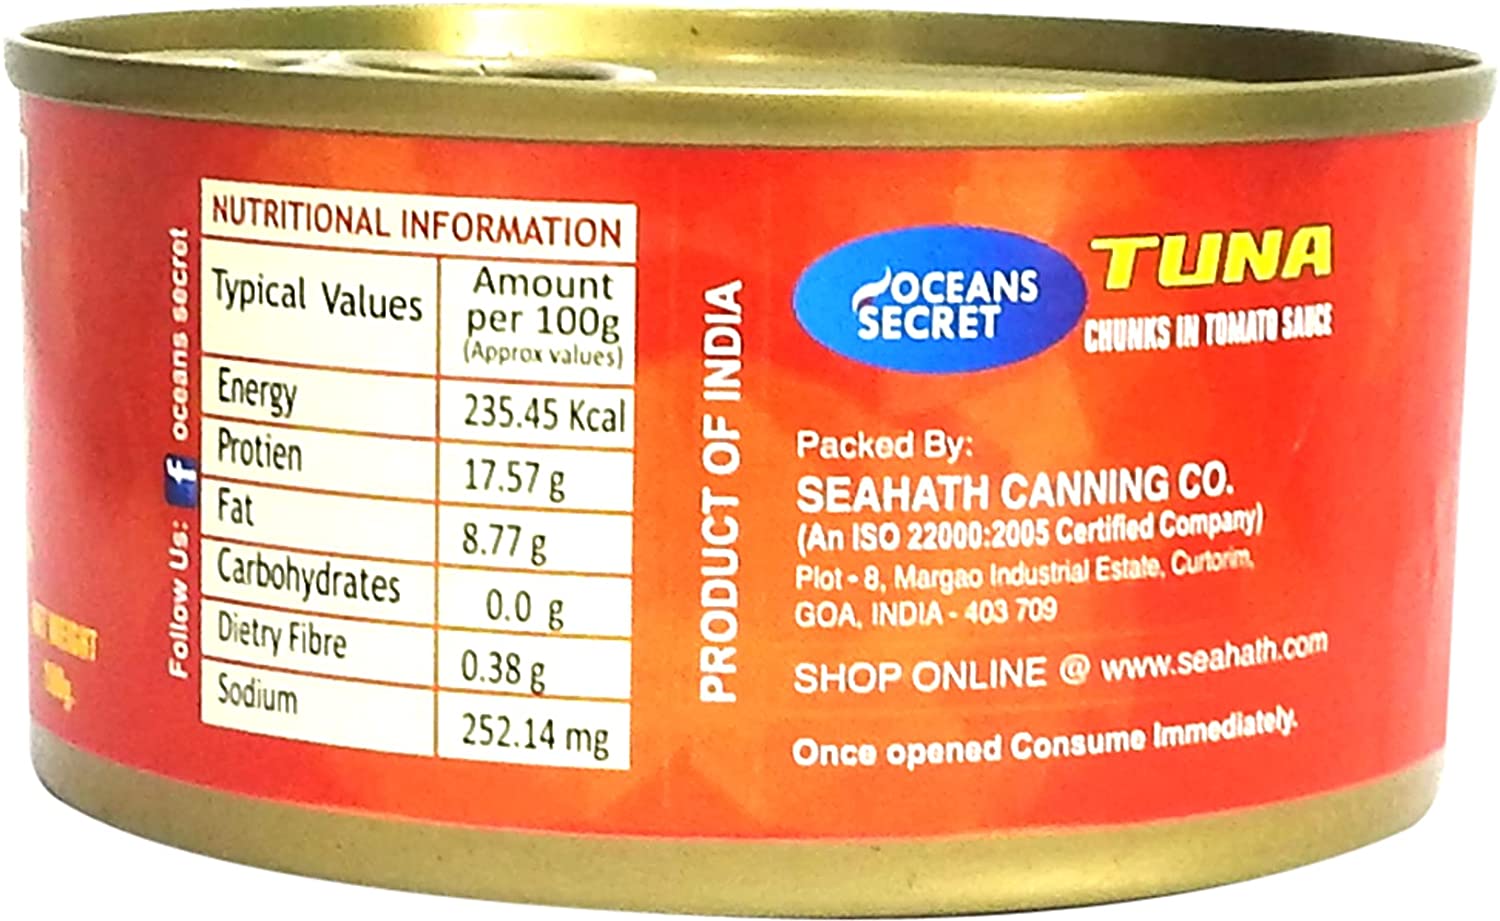 Ocean's Secret Canned Tuna Chunks in Tomato Sauce Image